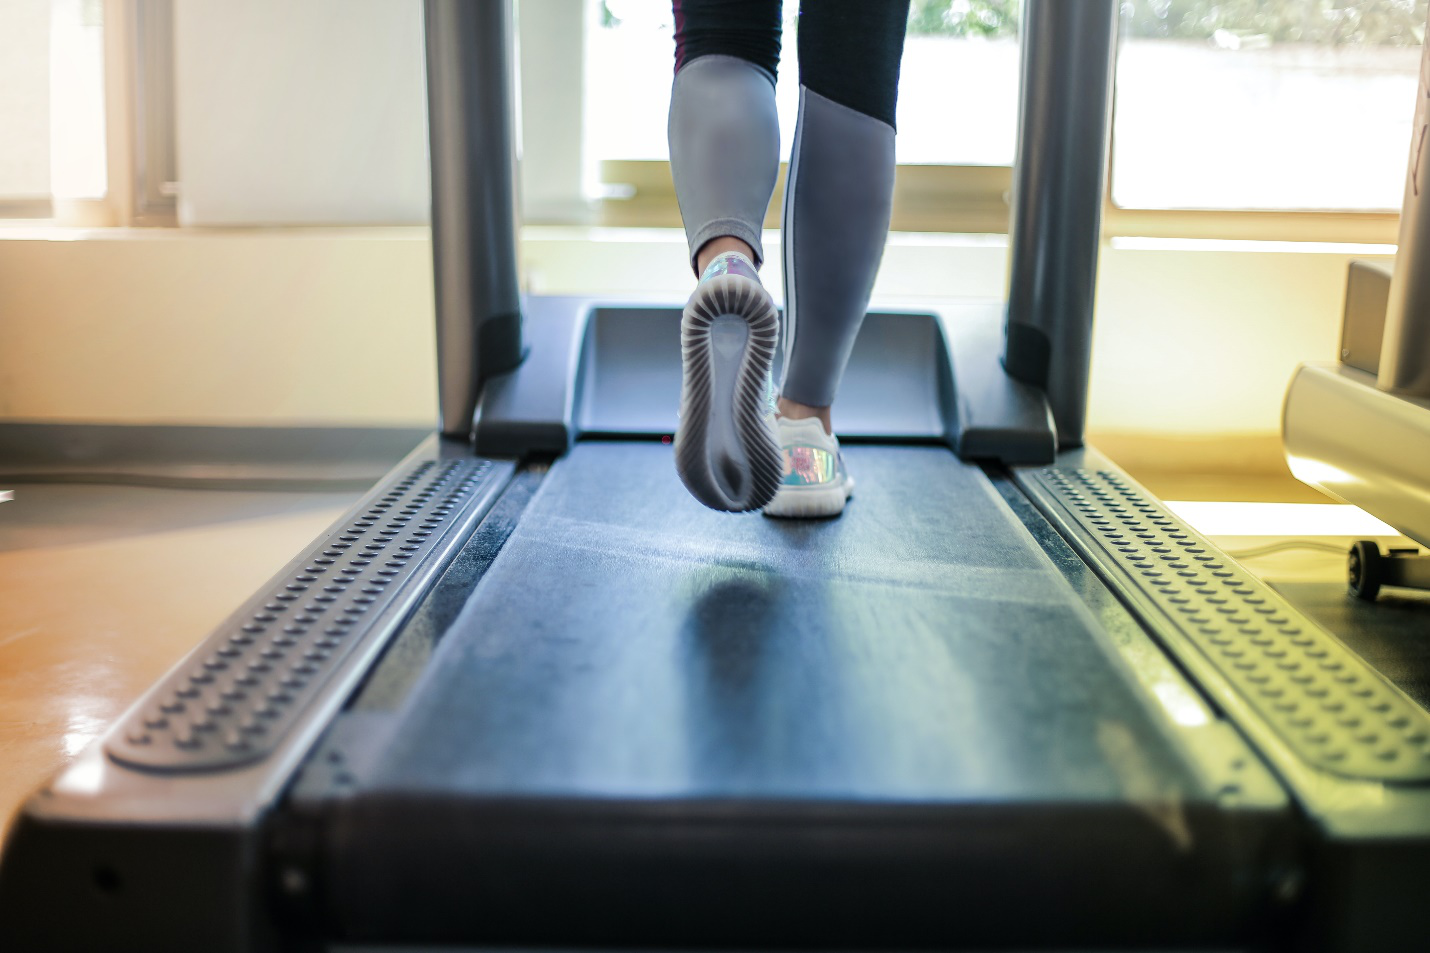 A pair of feet is seen running on a treadmill